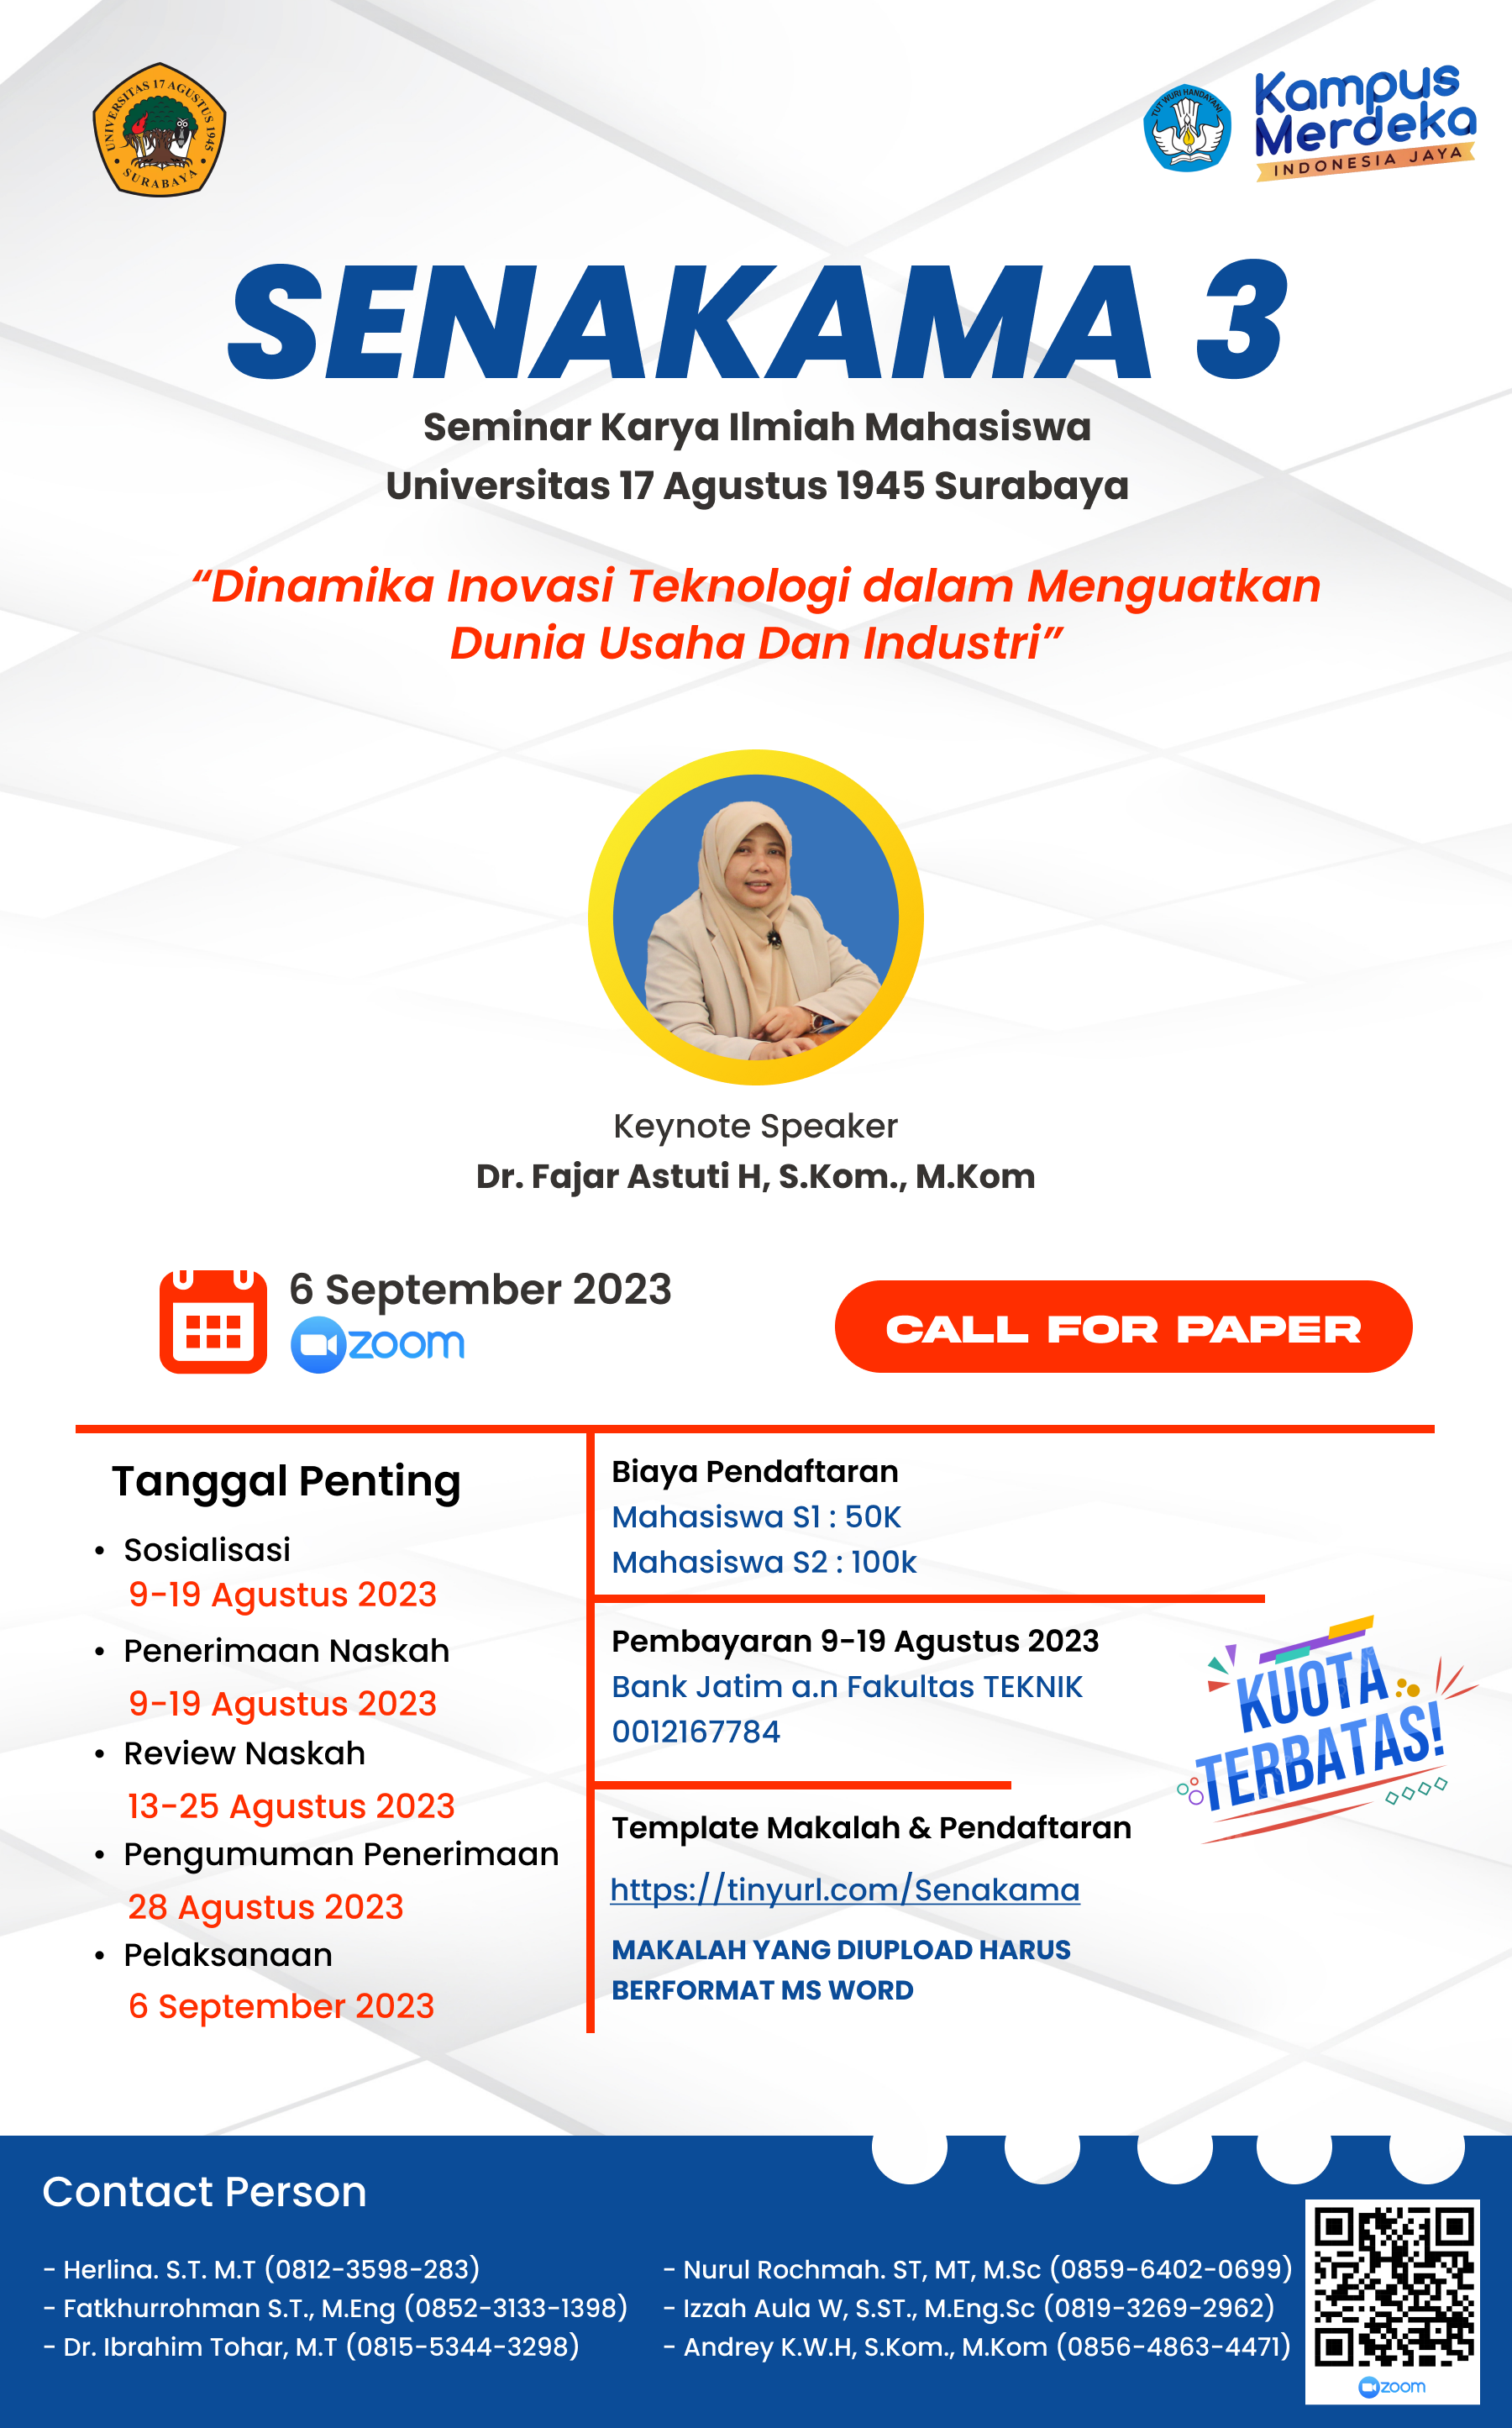 Seminar Karya Ilmiah Mahasiswa; Keynote Speaker: Dr. Fajar Astuti H, S.Kom., M.Kom